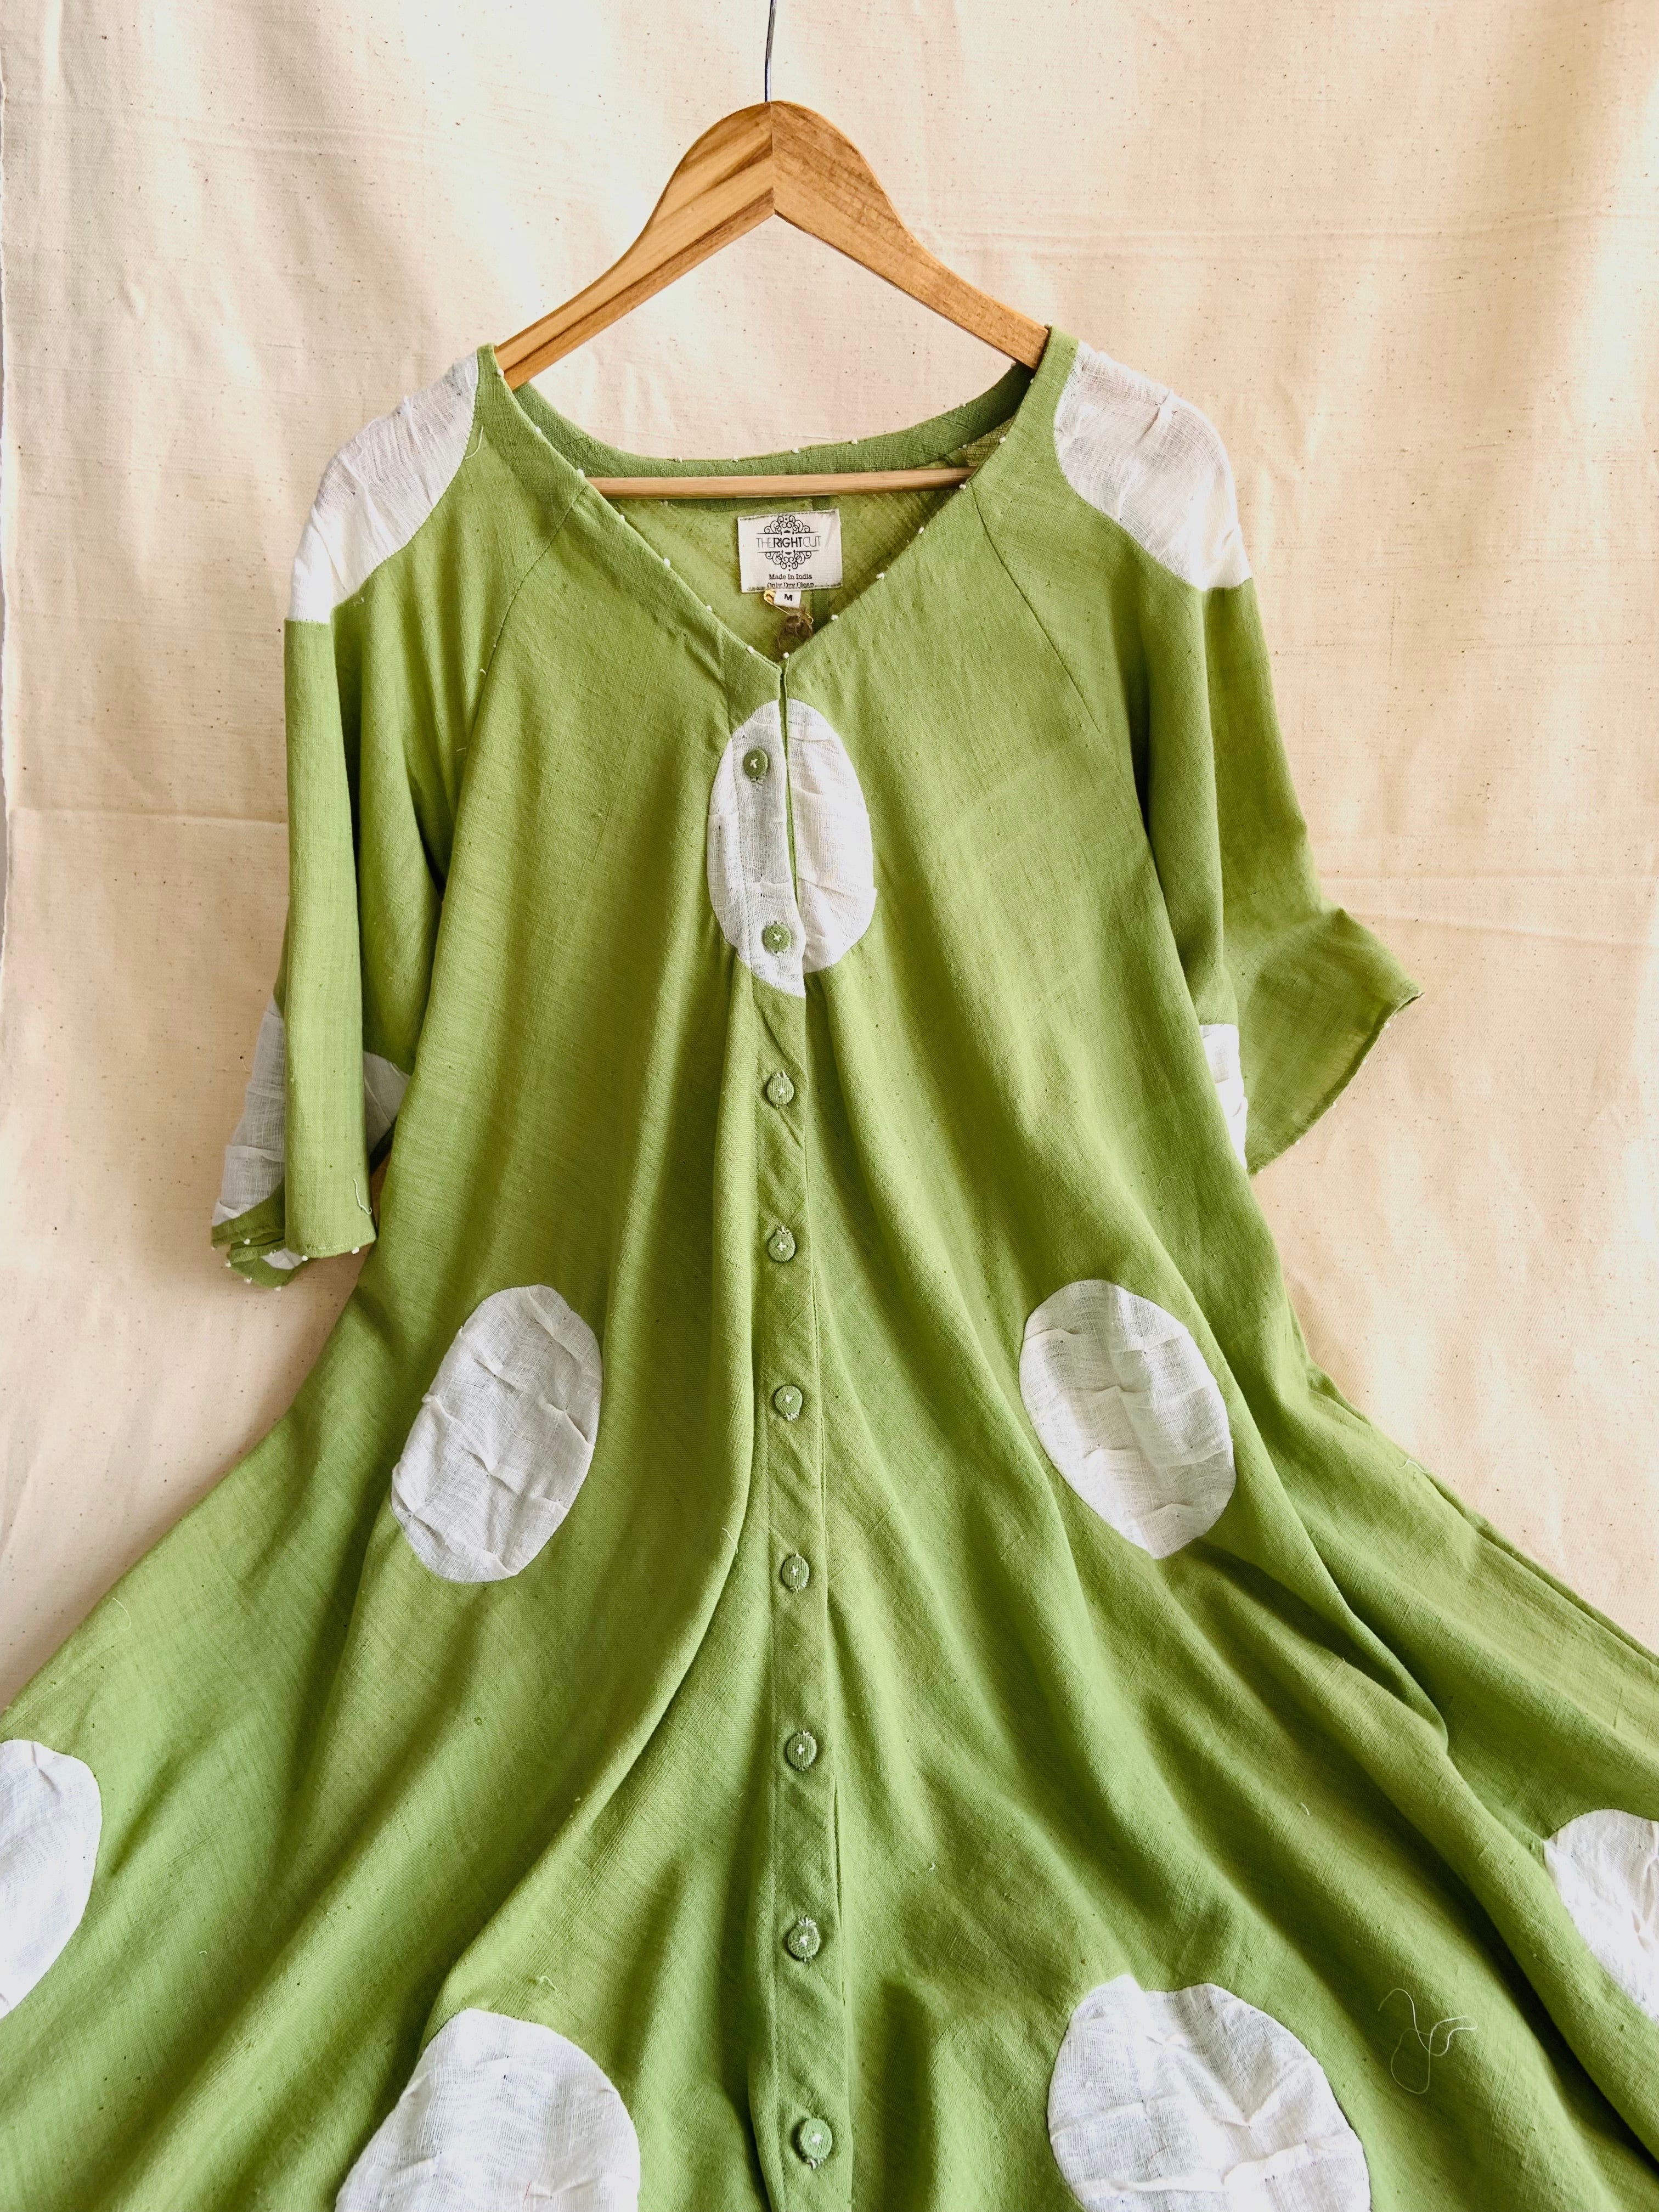 Lemon Bay dress